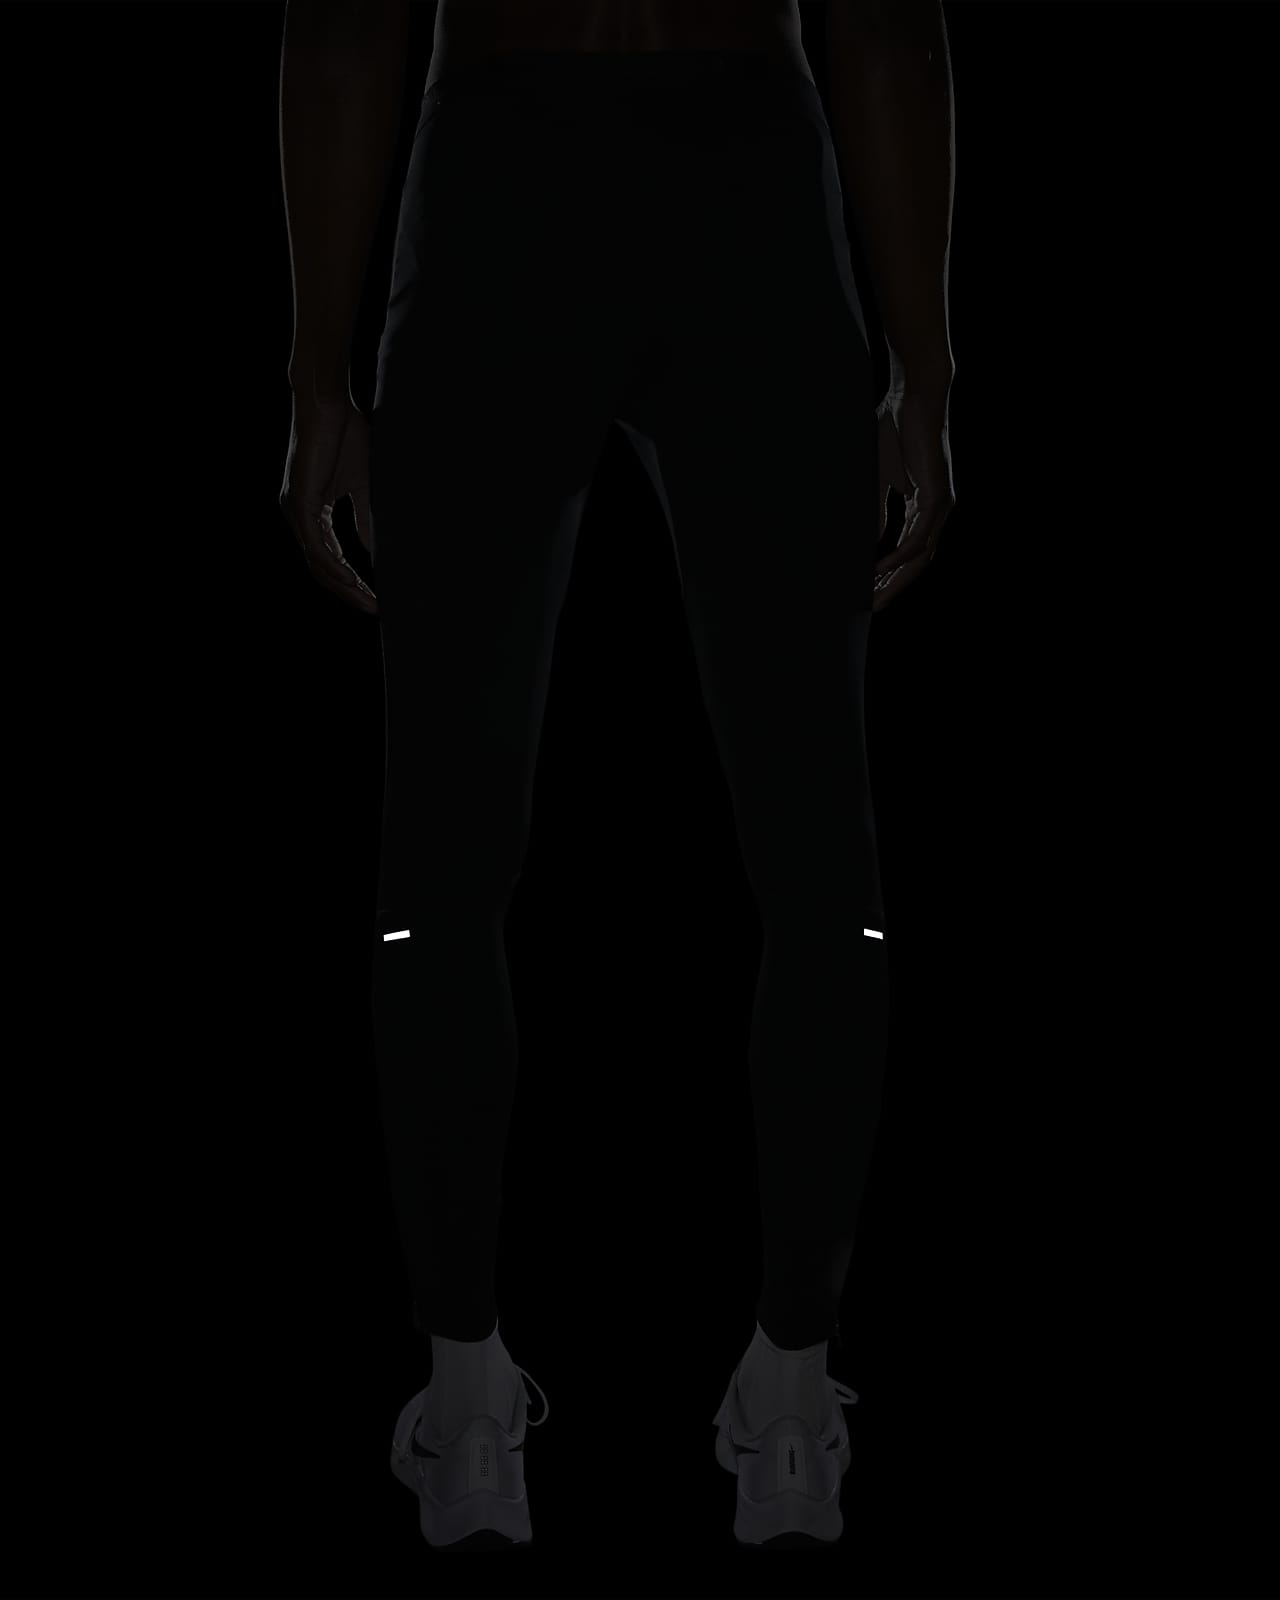 Nike Storm-FIT Phenom Elite Men's Running Tights. Nike CA